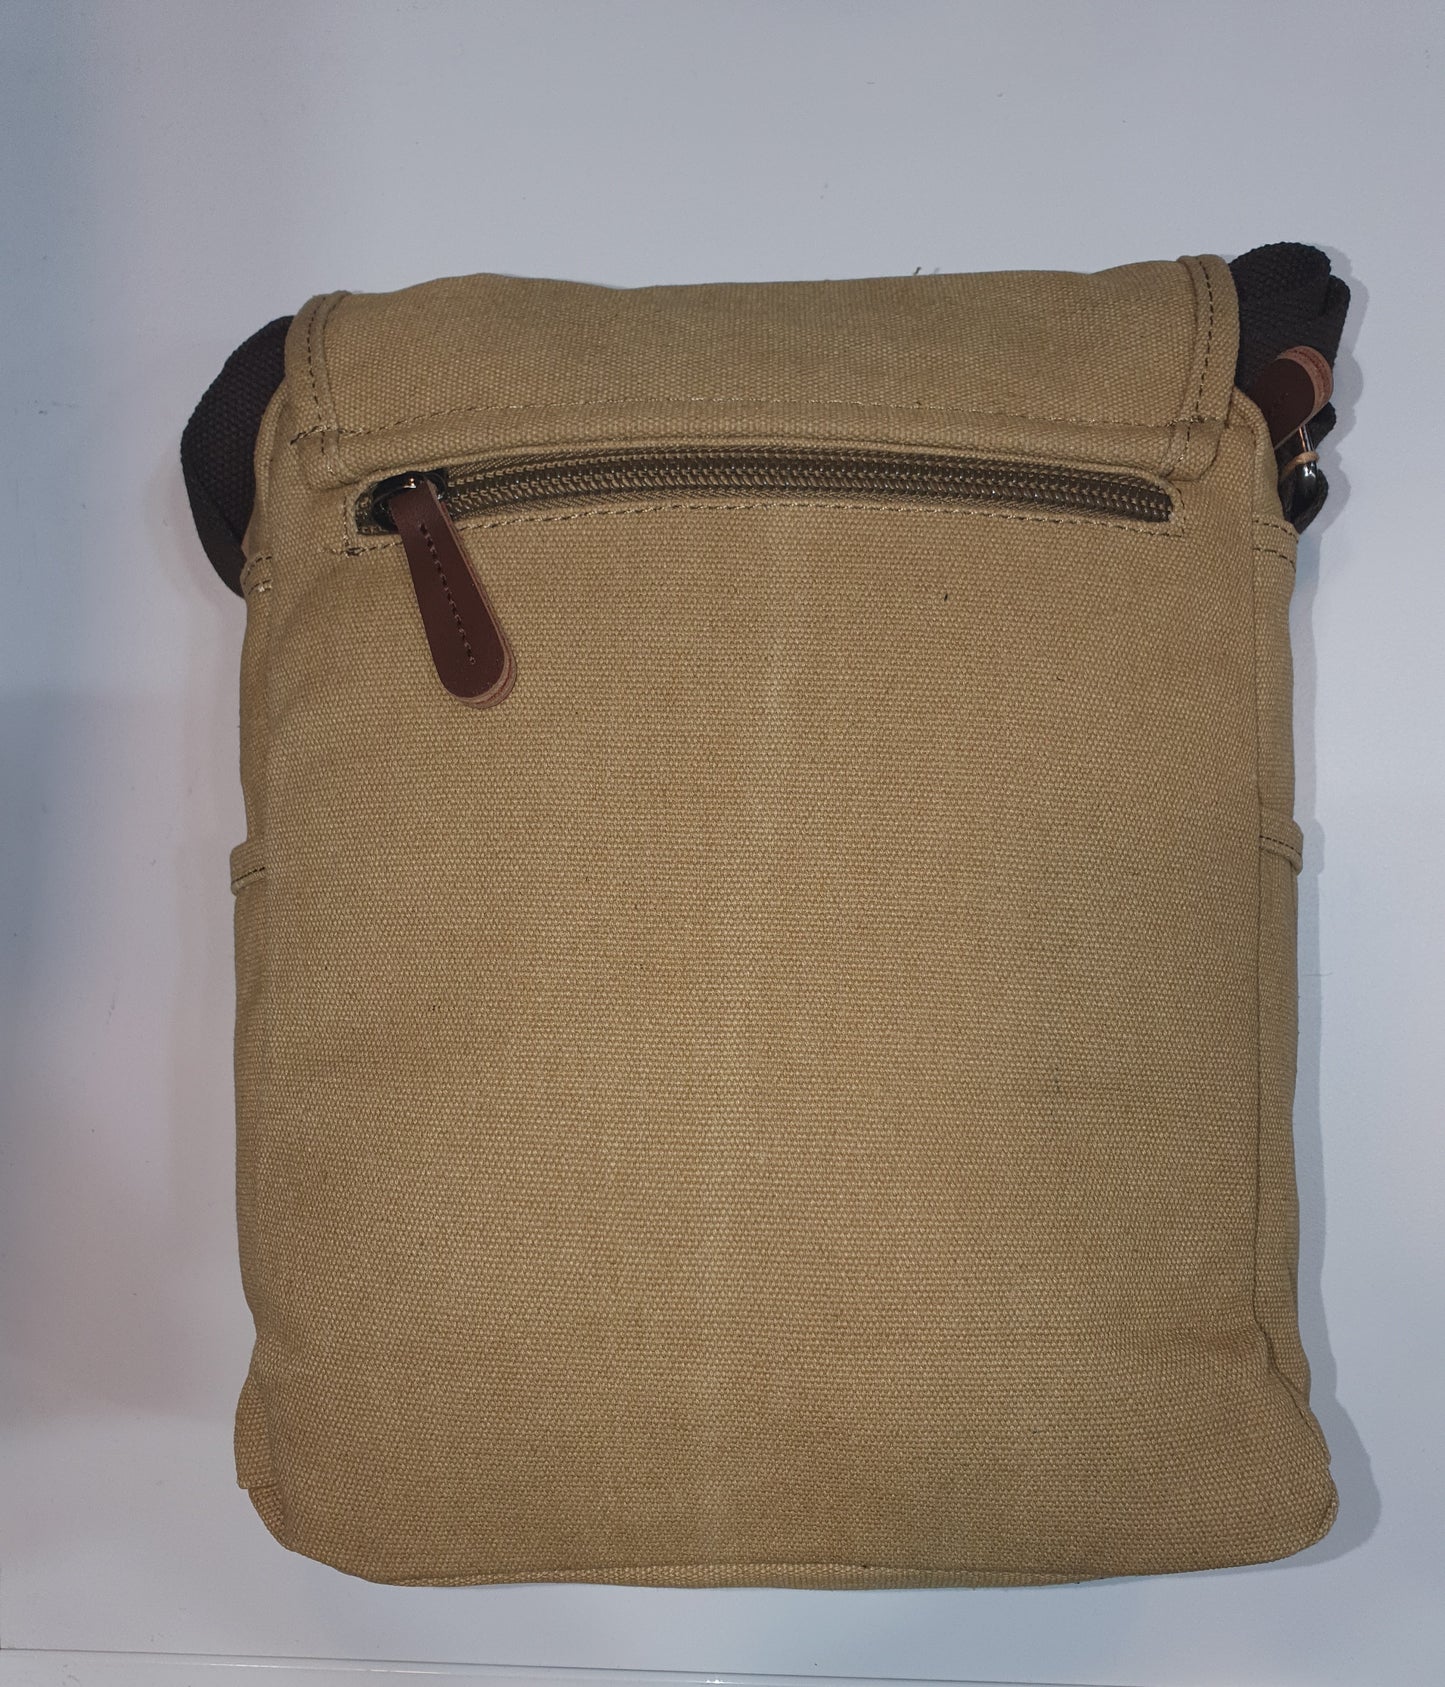 Zuolunduo Vintage style Canvas Shoulder Bag